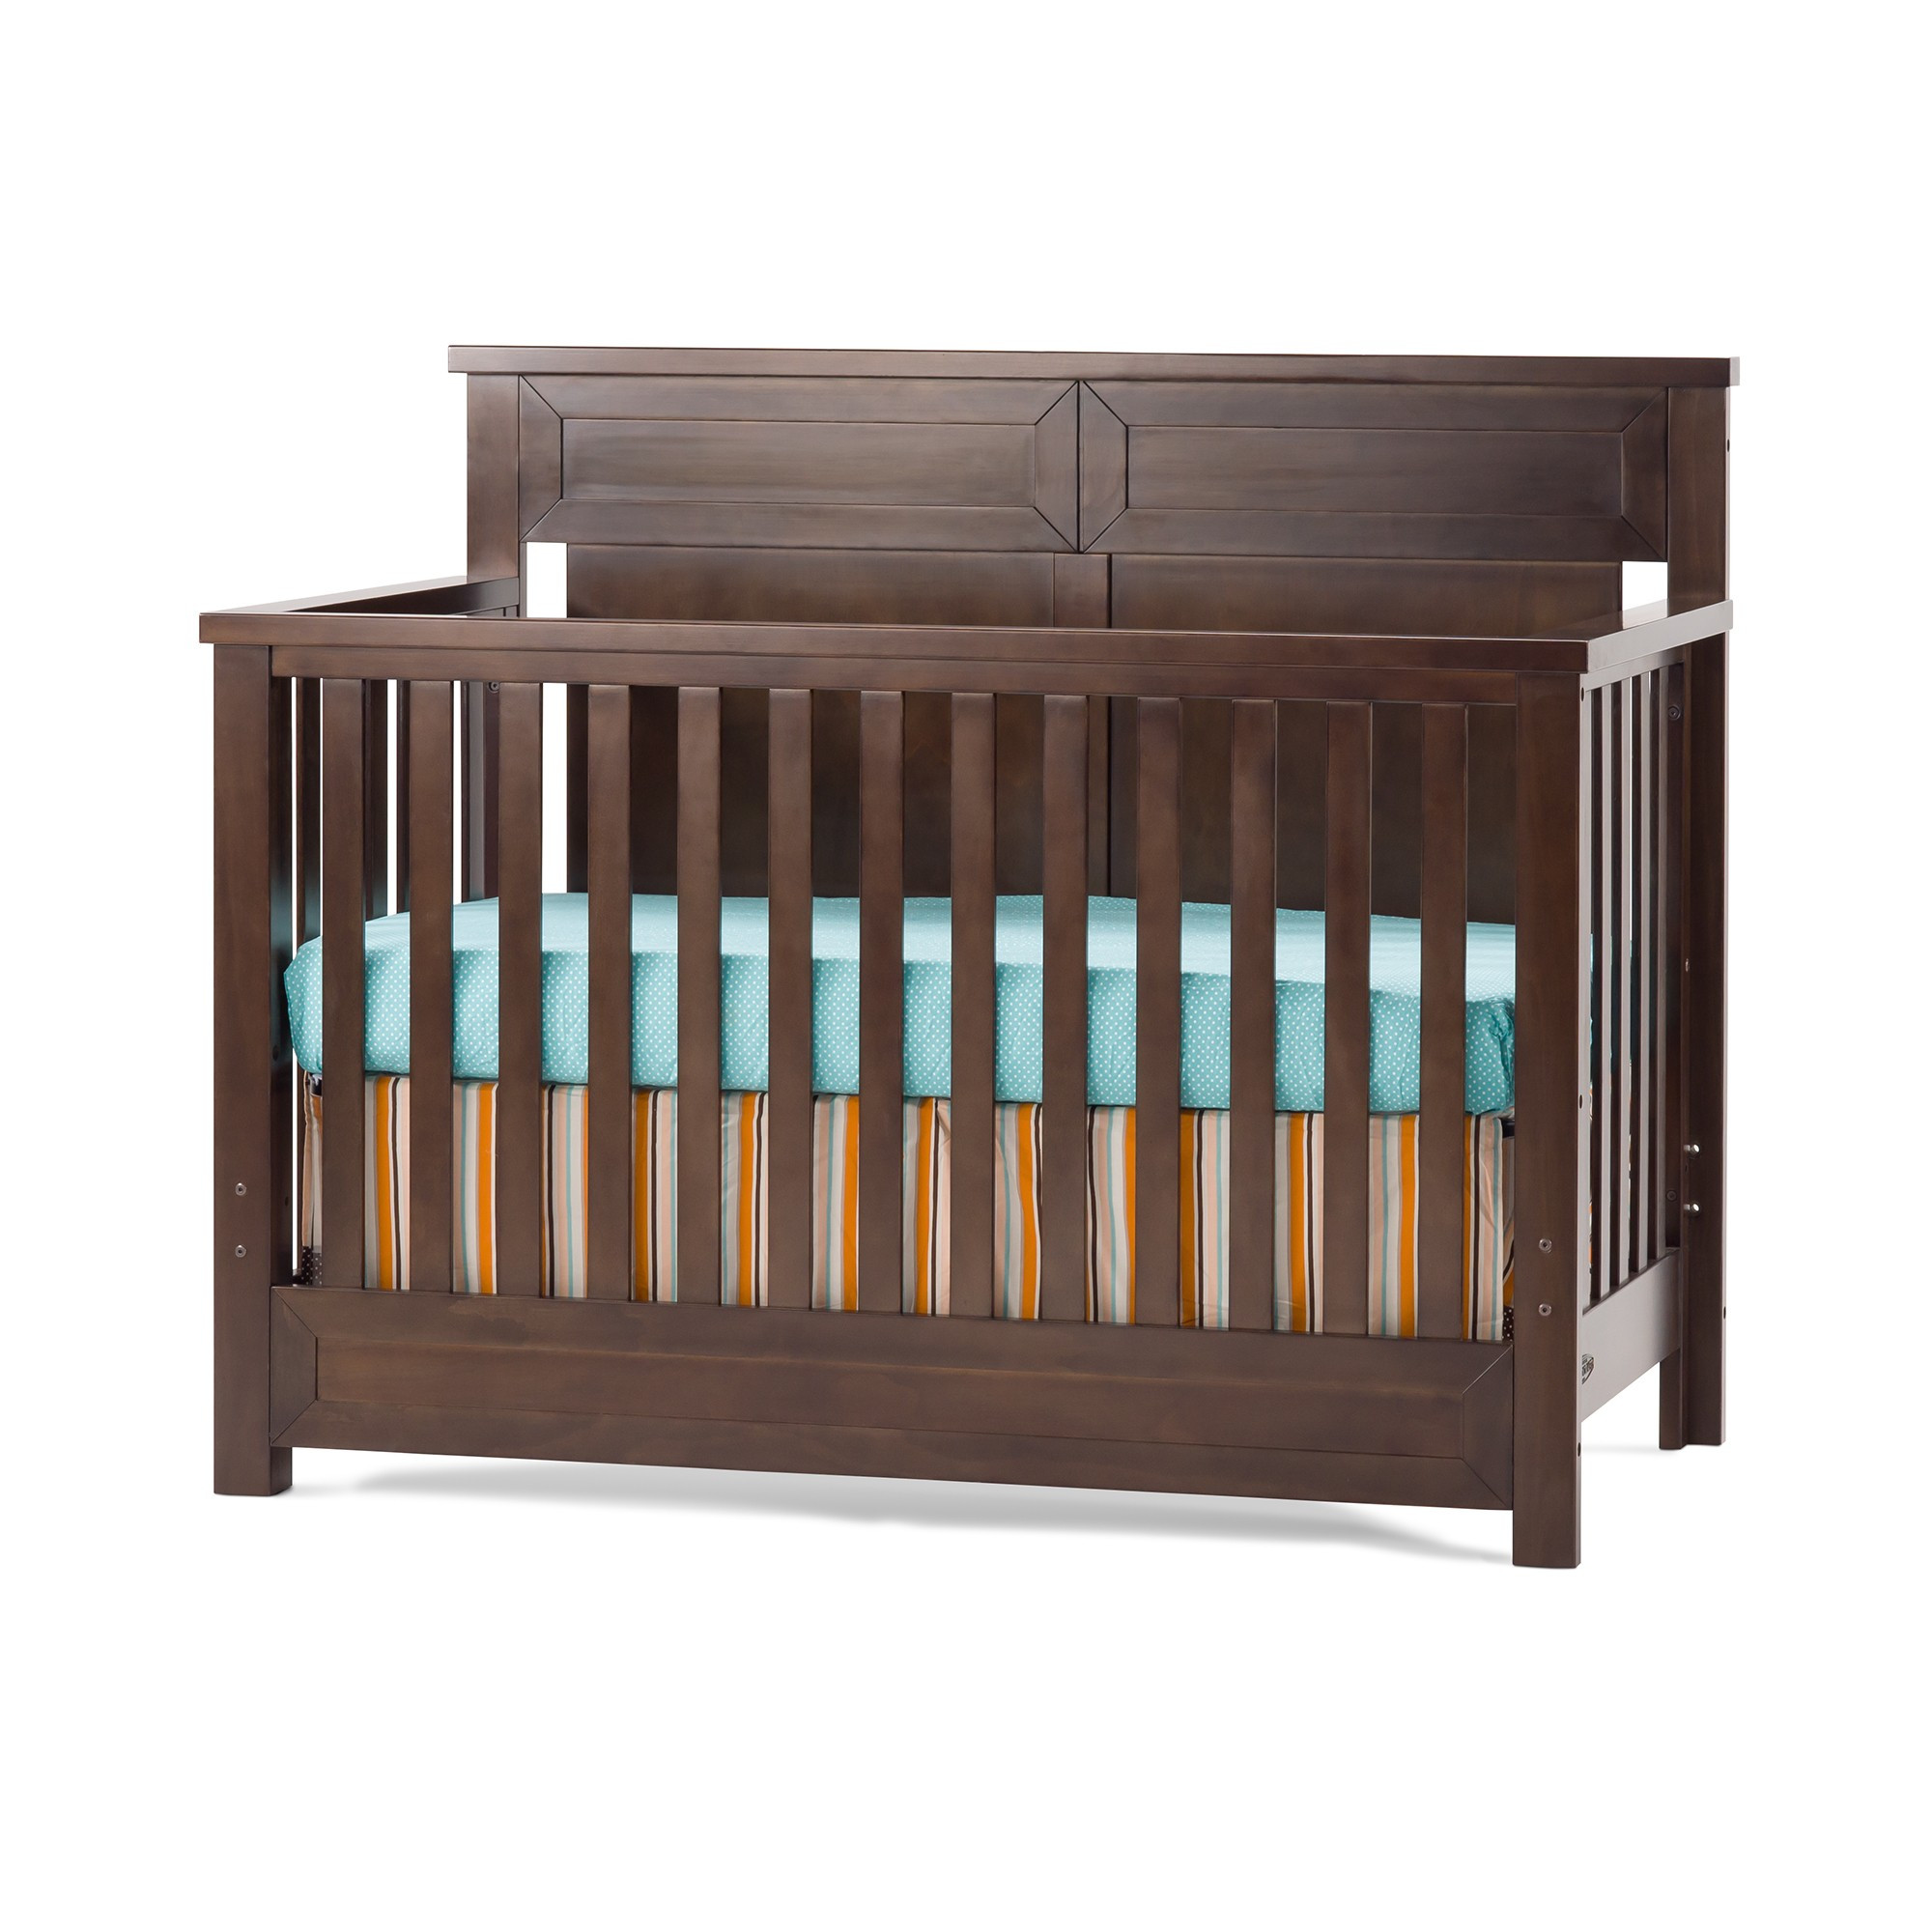 Child Craft Convertible Crib
 Abbott 4 in 1 Convertible Crib